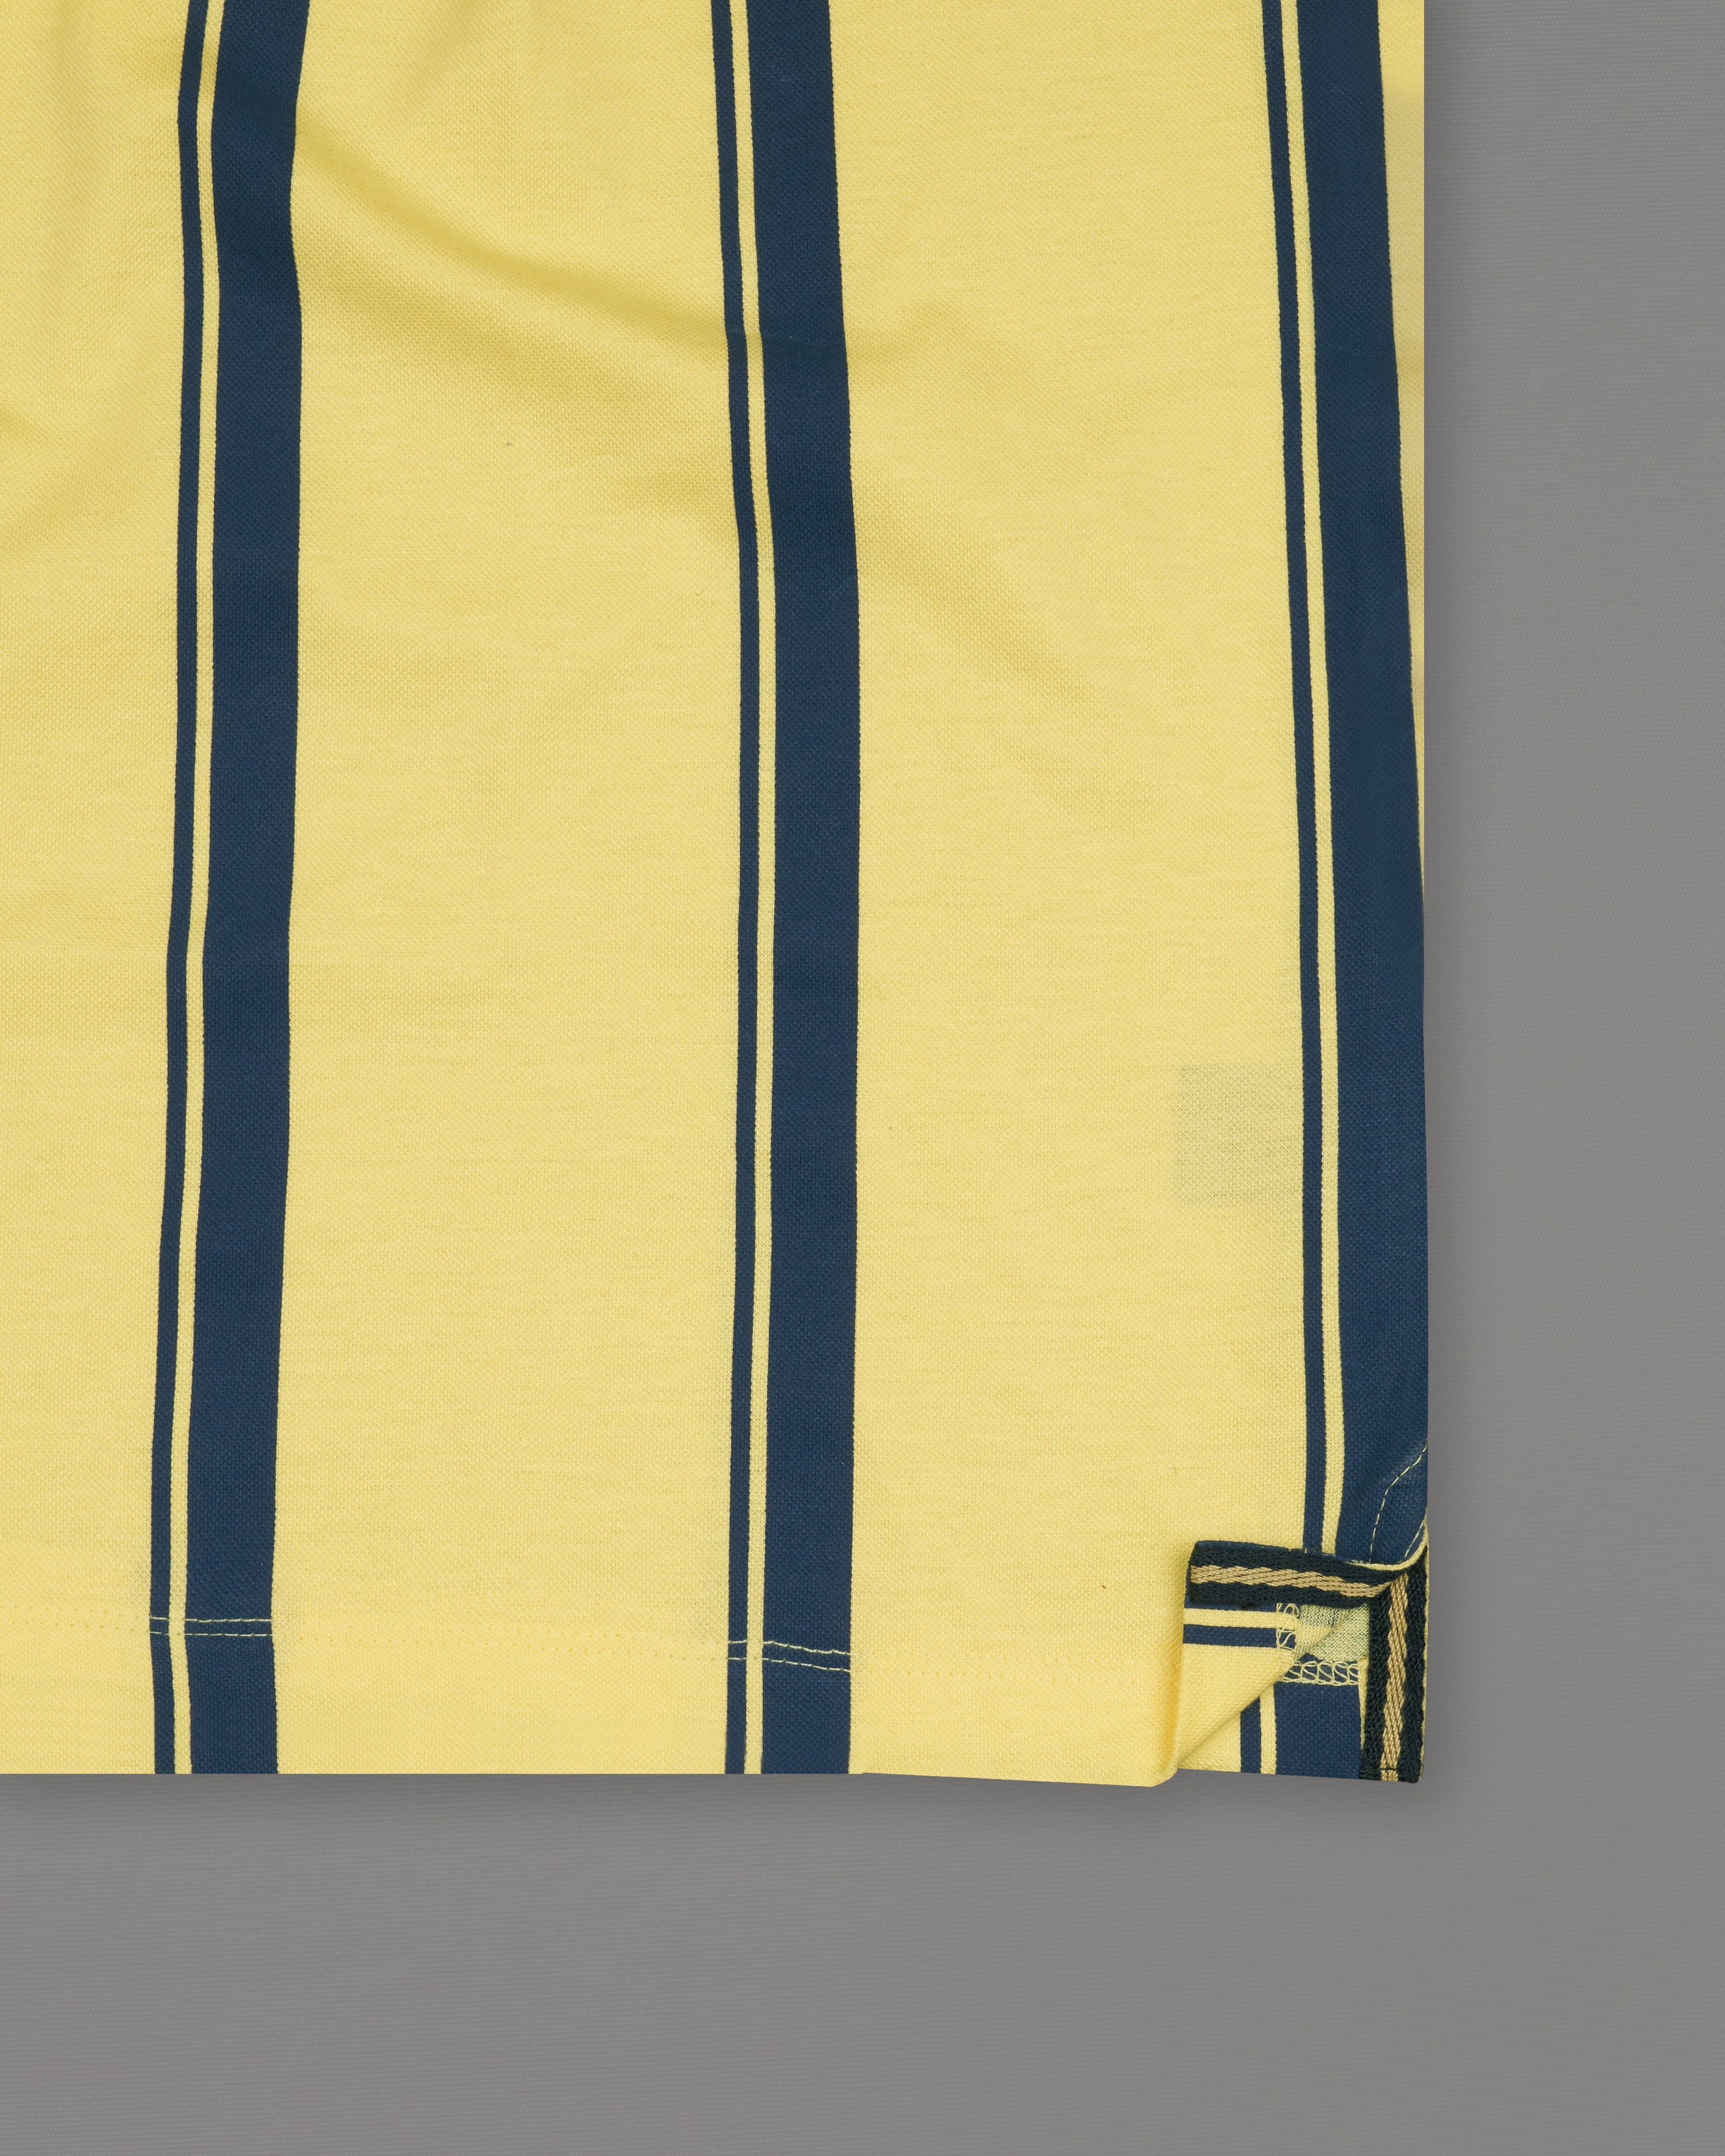 Goldenrod Yellow with Tuna Blue Striped Organic Cotton Pique Polo TS850-S, TS850-M, TS850-L, TS850-XL, TS850-XXL